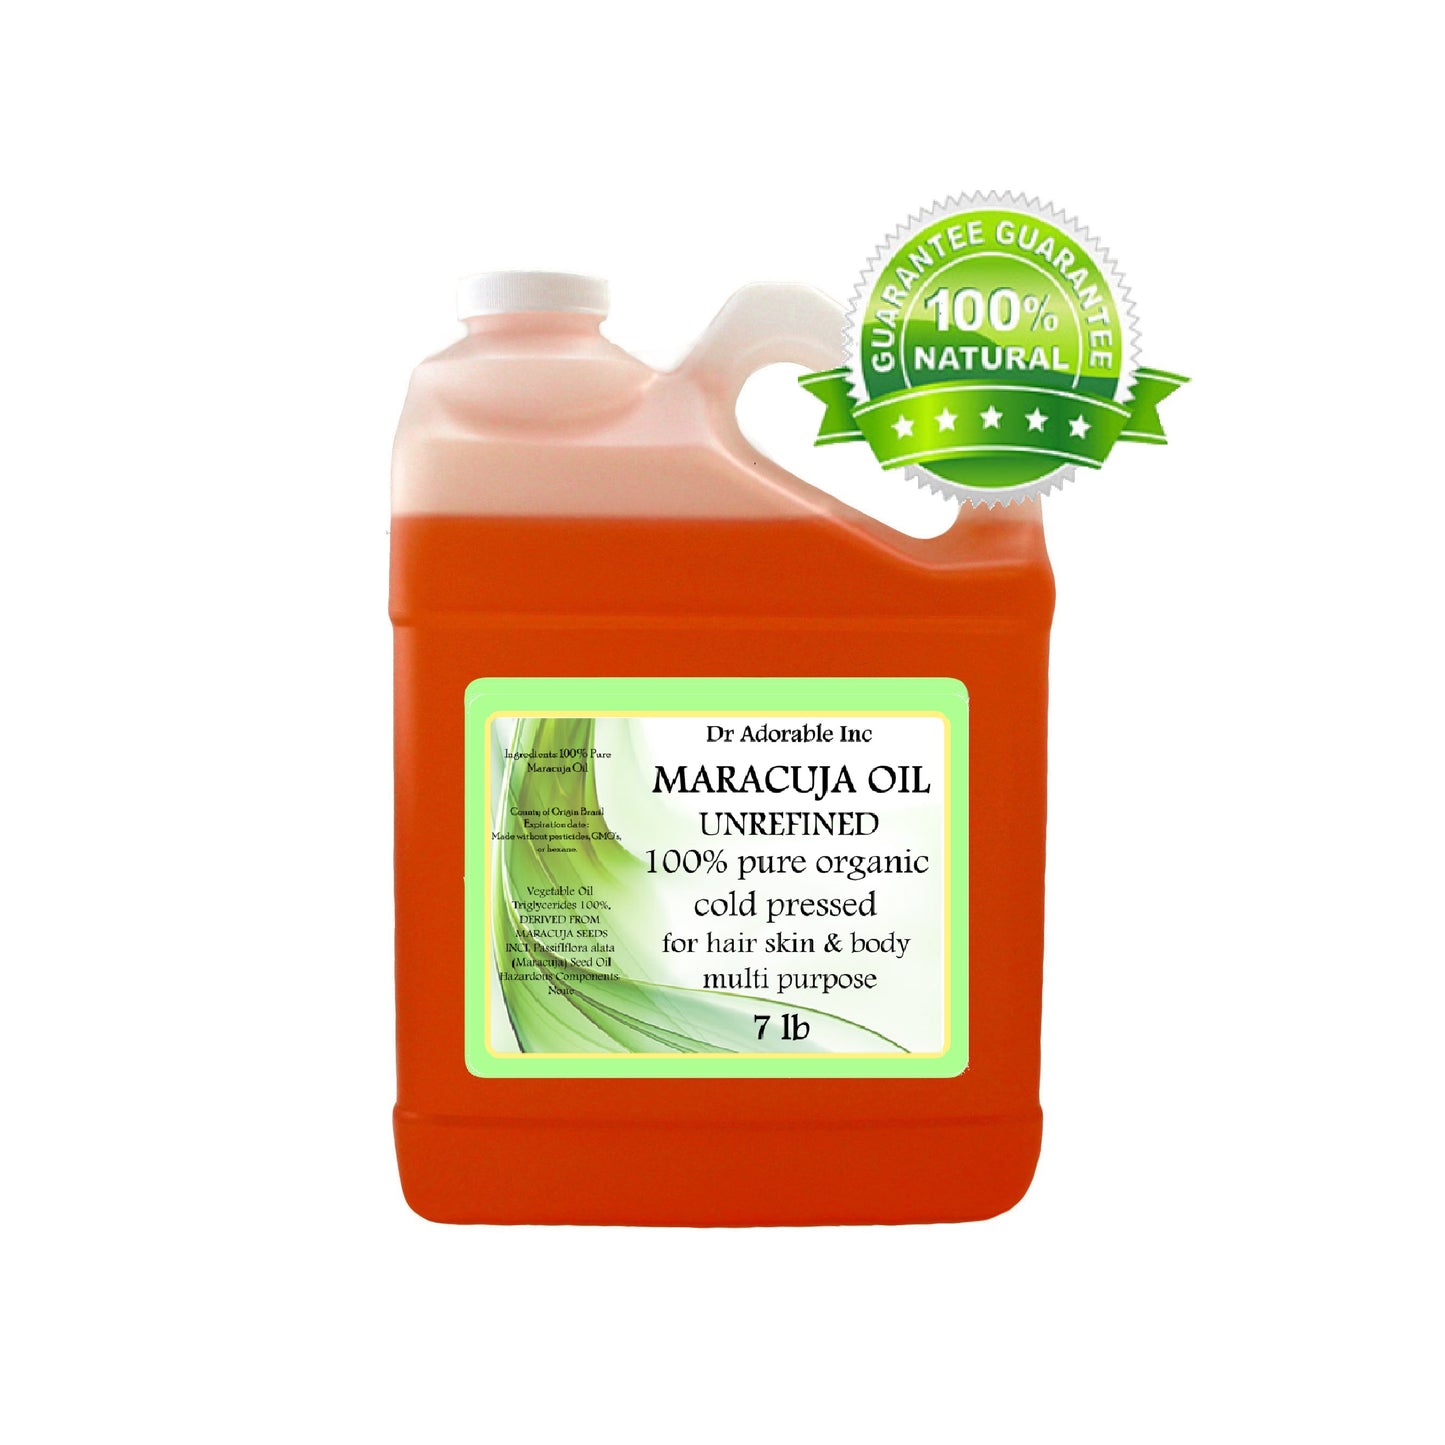 Maracuja (Passionfruit) Unrefined Oil - 100% Pure Natural Premium Organic Cold Pressed